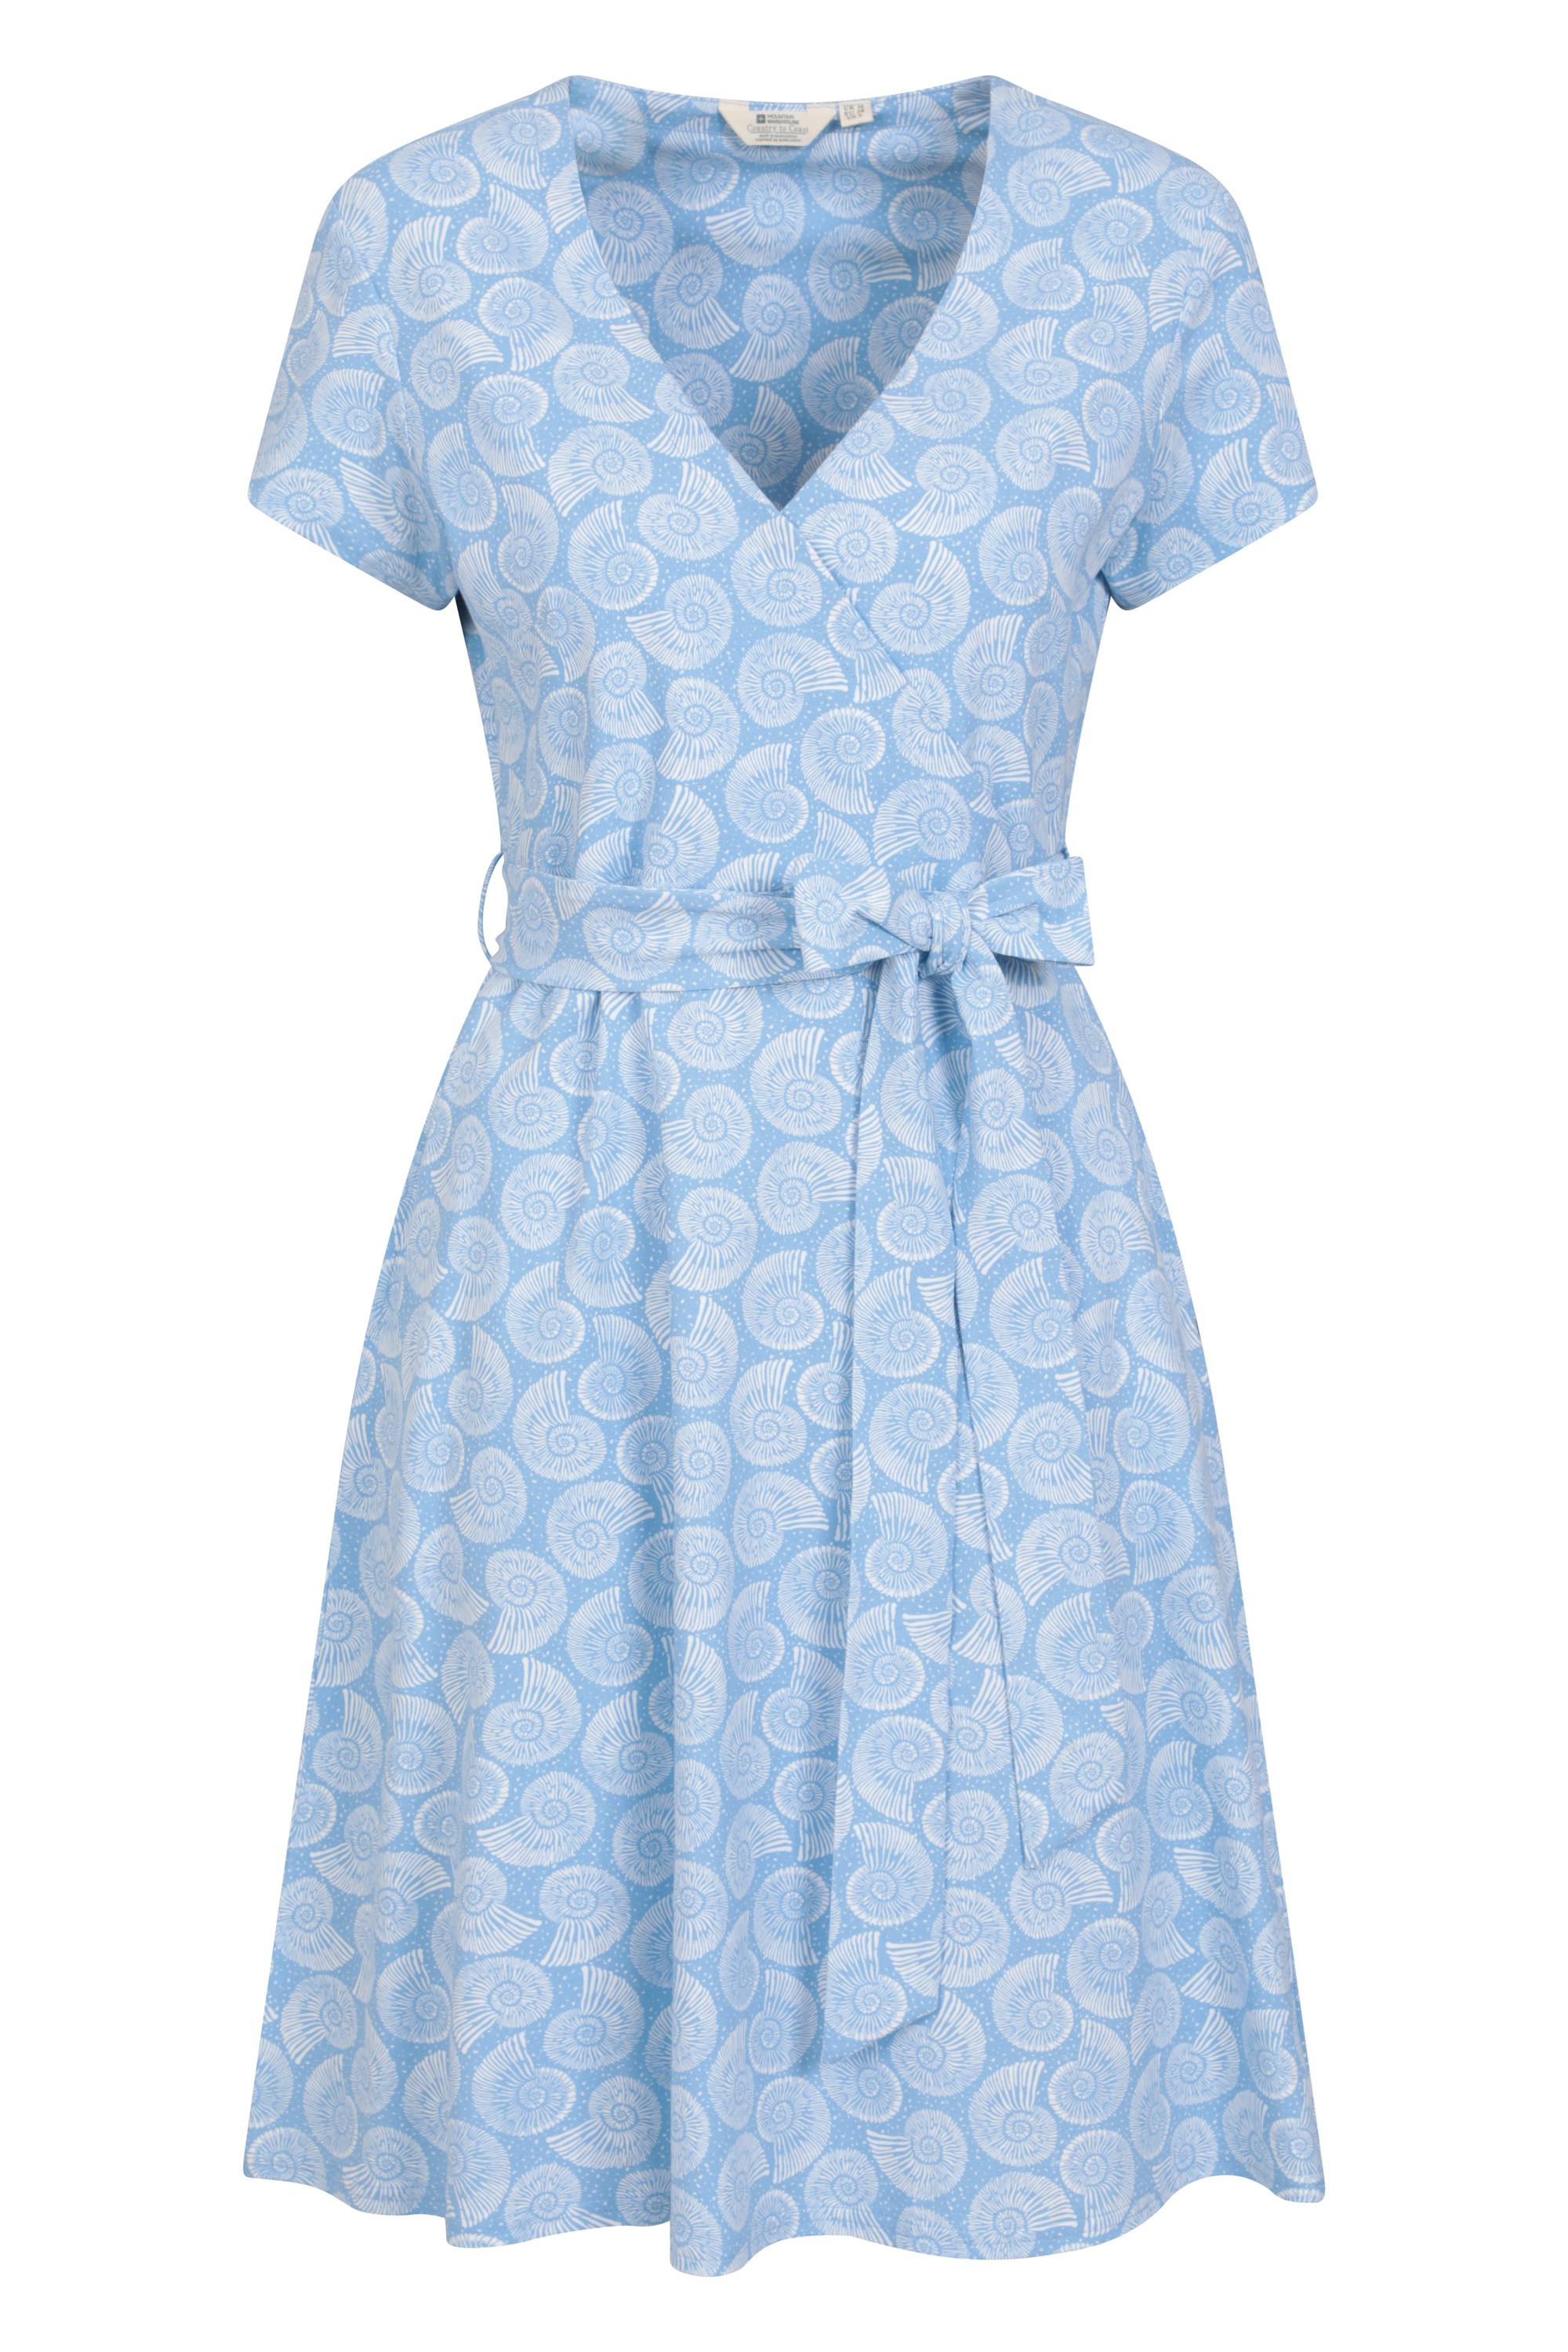 Santorini Womens UV Jersey Wrap Dress - Light Blue